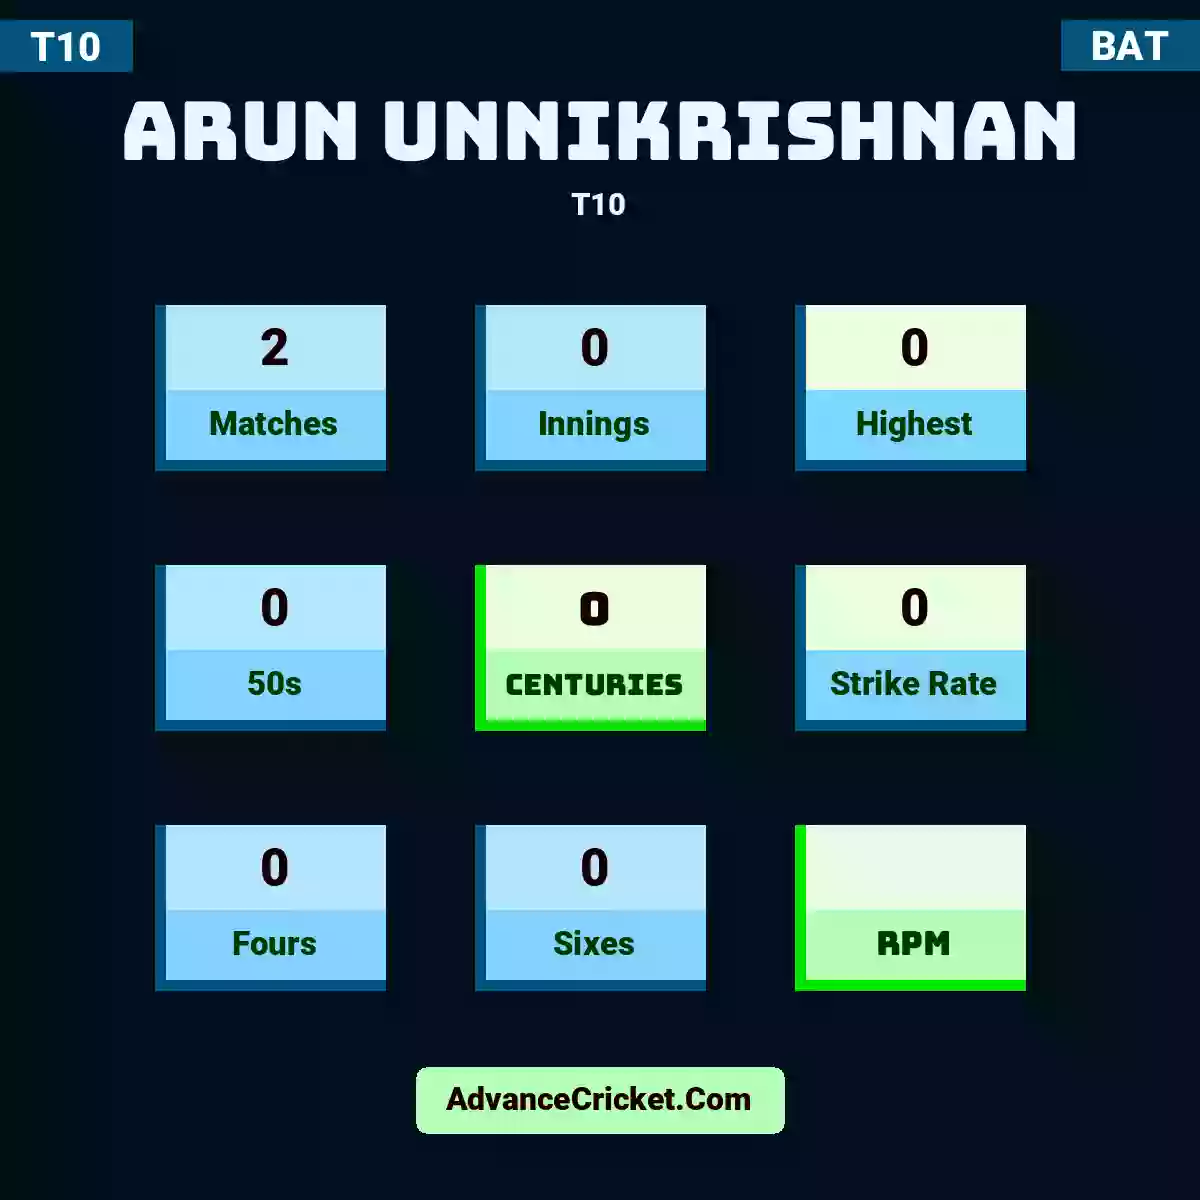 Arun Unnikrishnan T10 , Arun Unnikrishnan played 2 matches, scored 0 runs as highest, 0 half-centuries, and 0 centuries, with a strike rate of 0. A.Unnikrishnan hit 0 fours and 0 sixes.